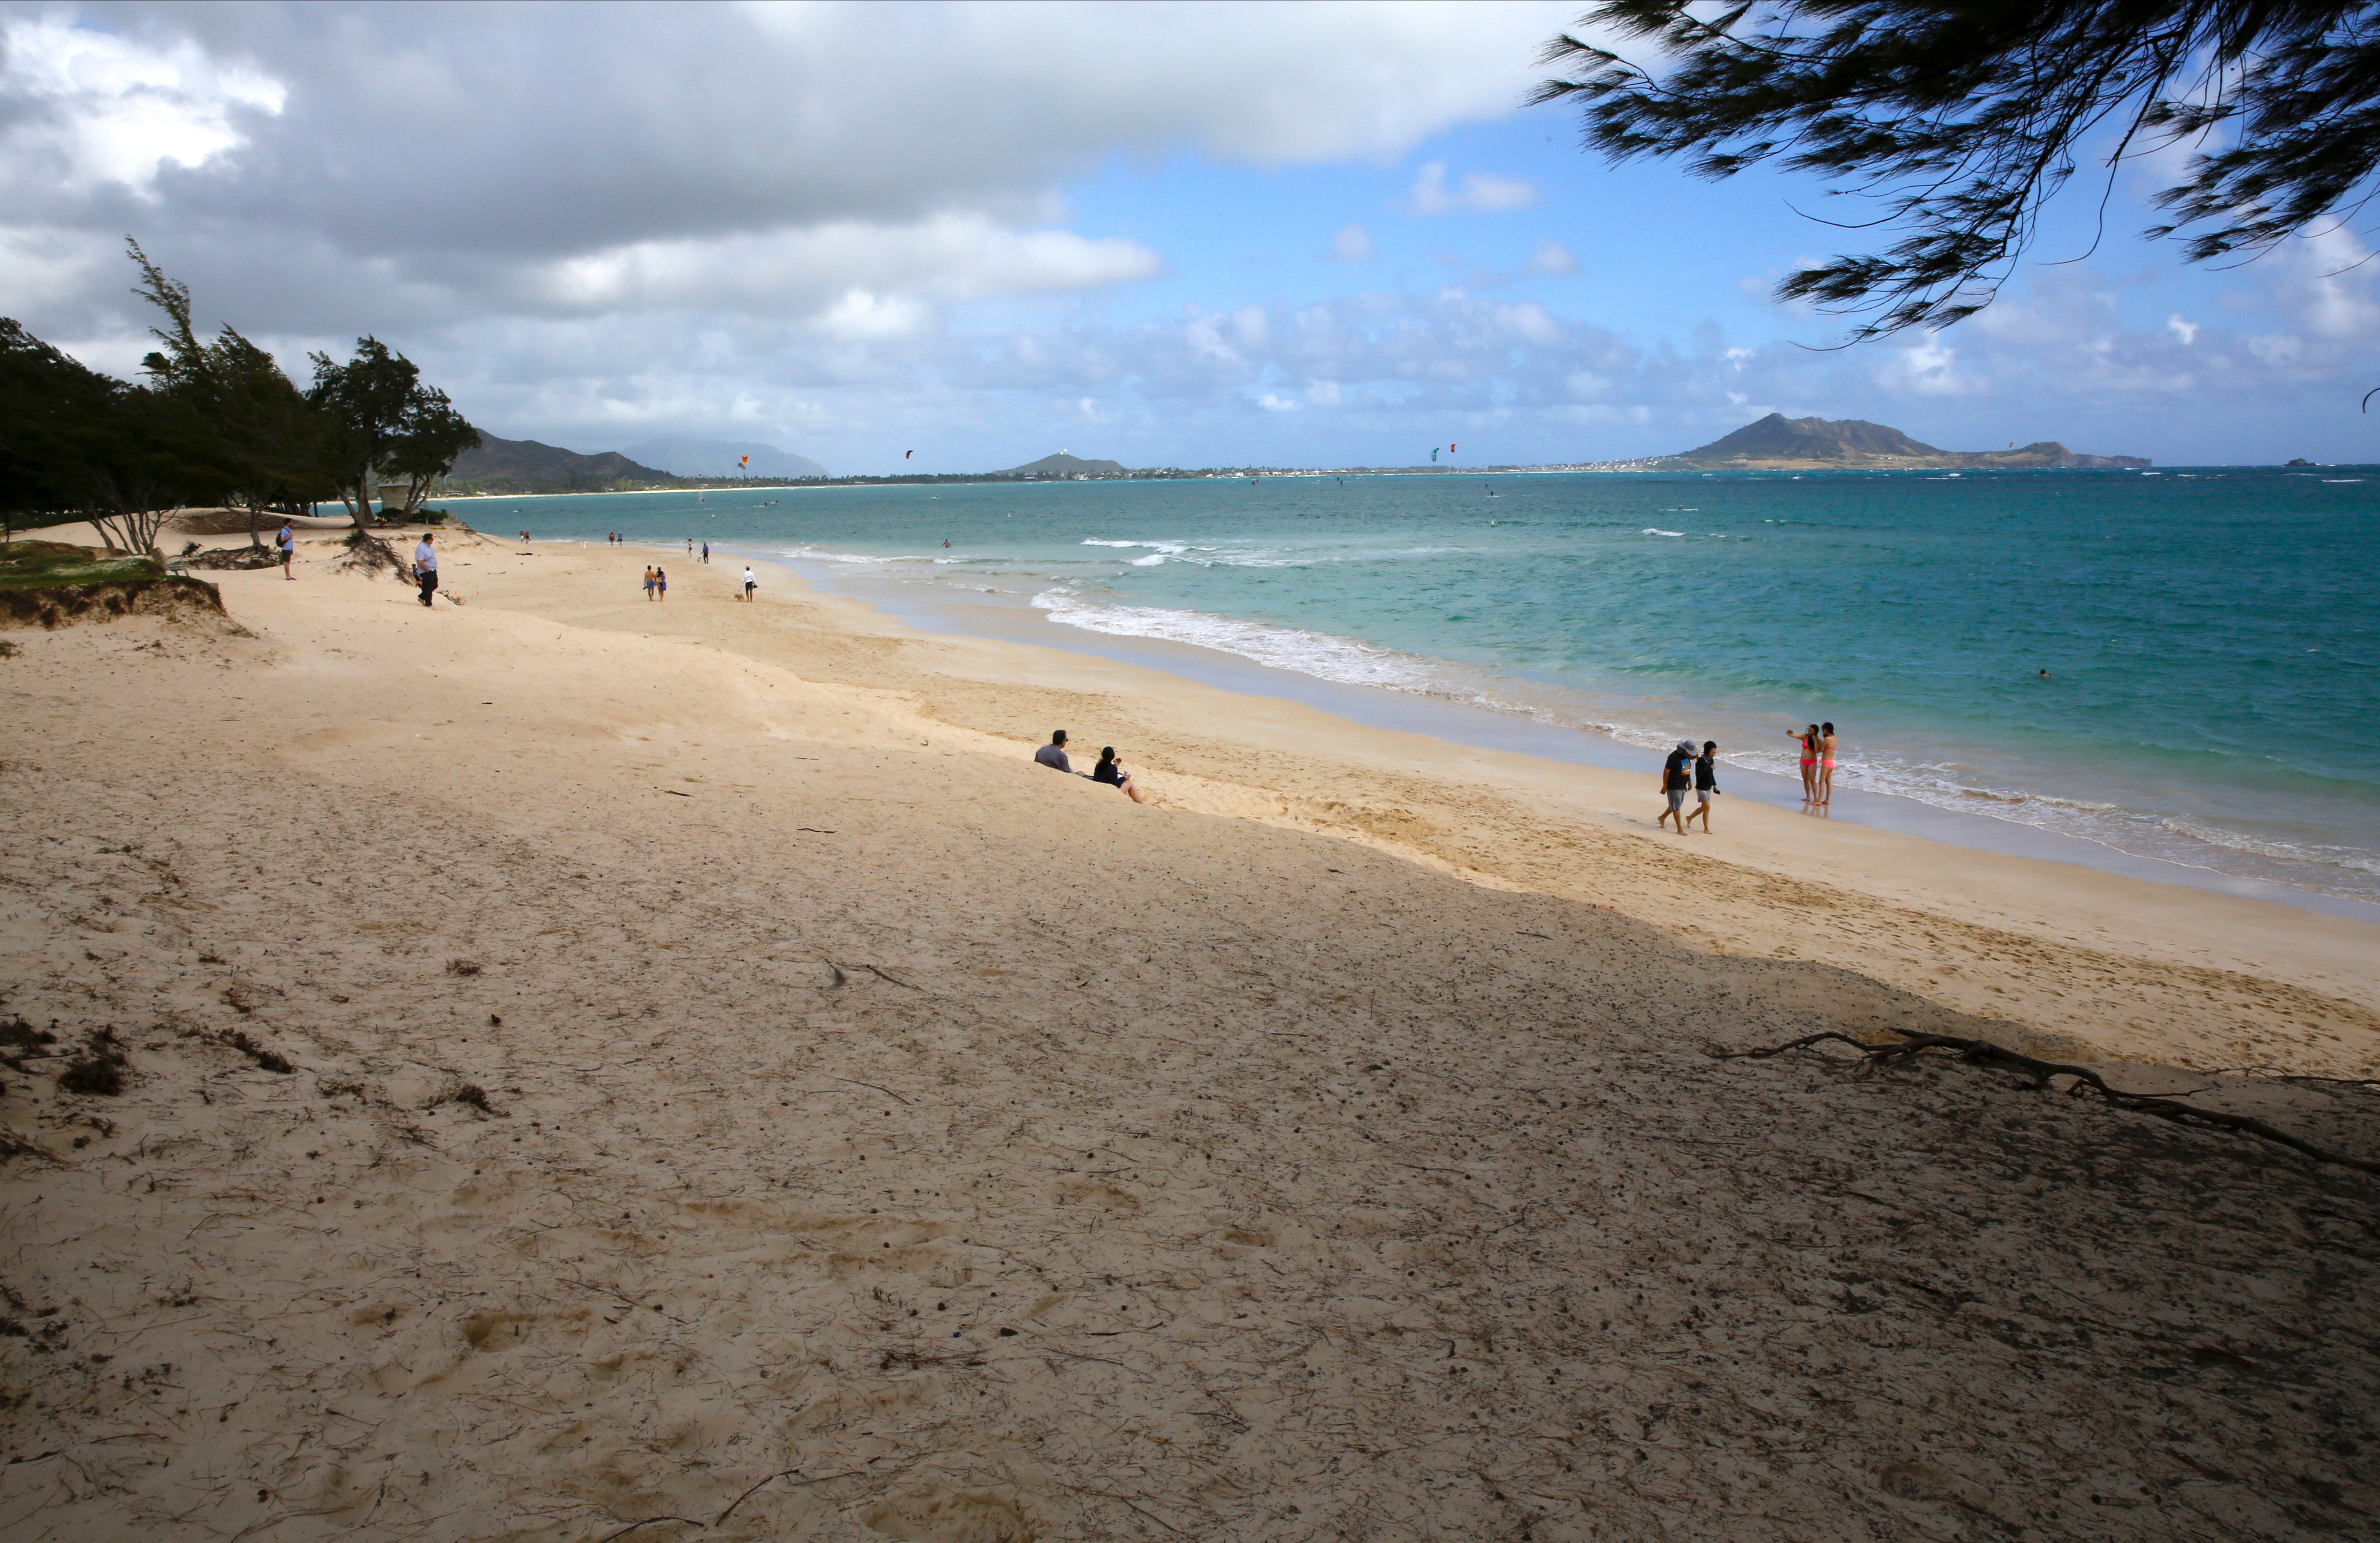 People walk on the beach in Kailua, Hawaii